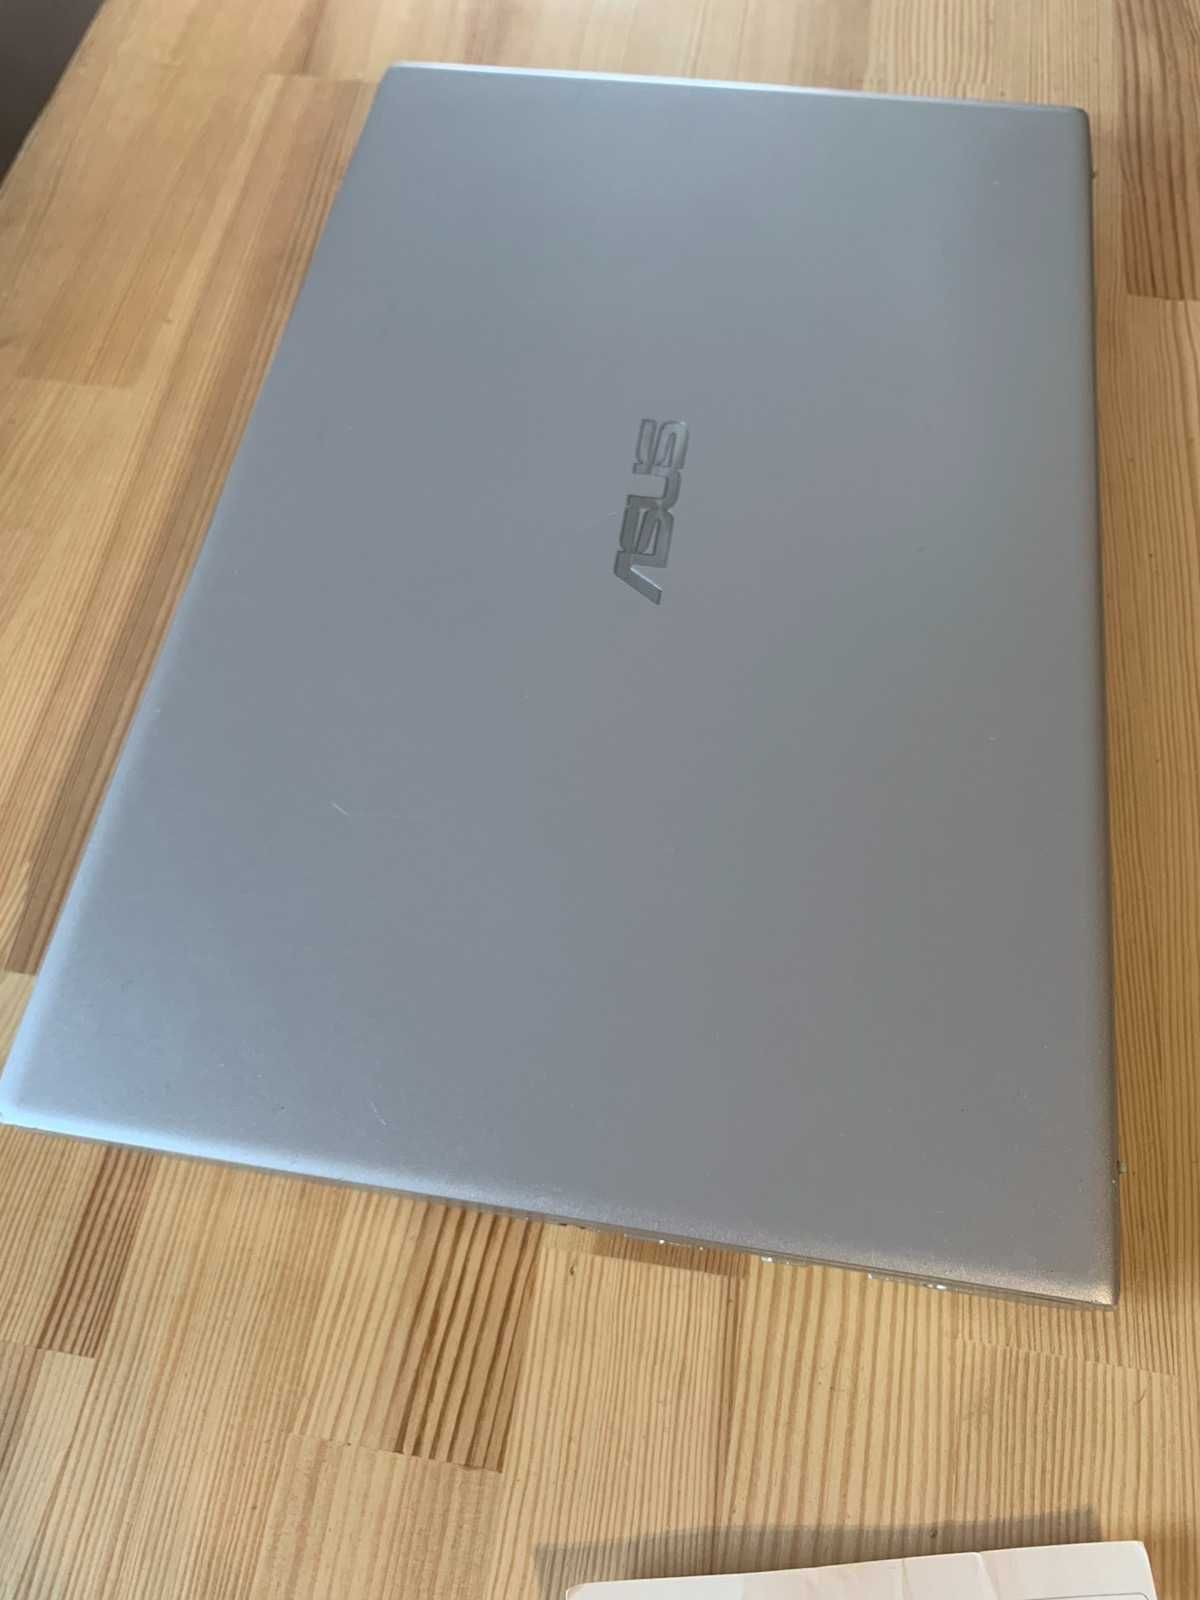 Laptop ASUS VivoBook 15